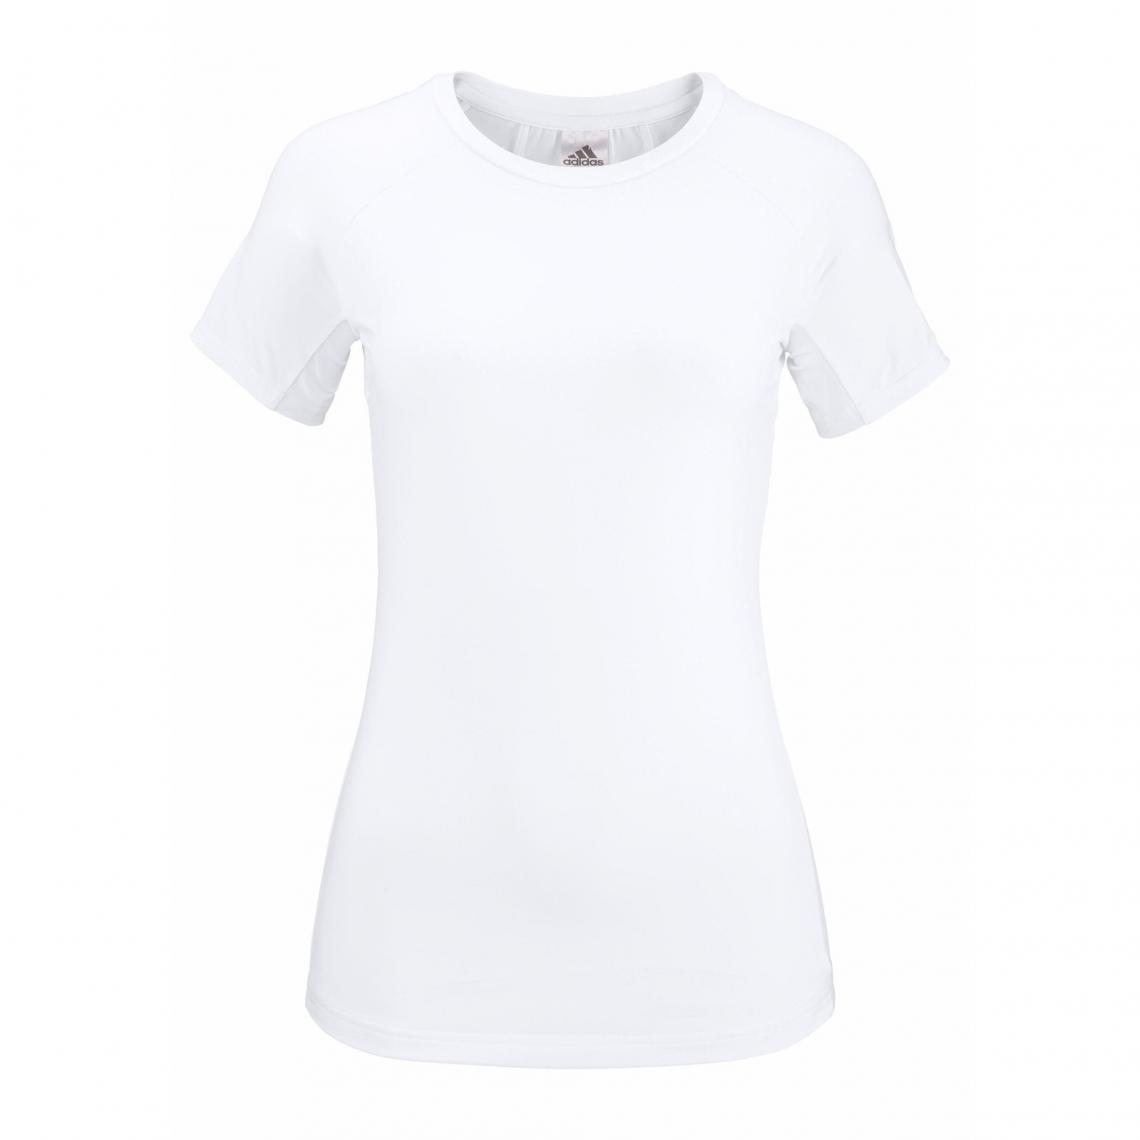 tee shirt adidas femme blanc